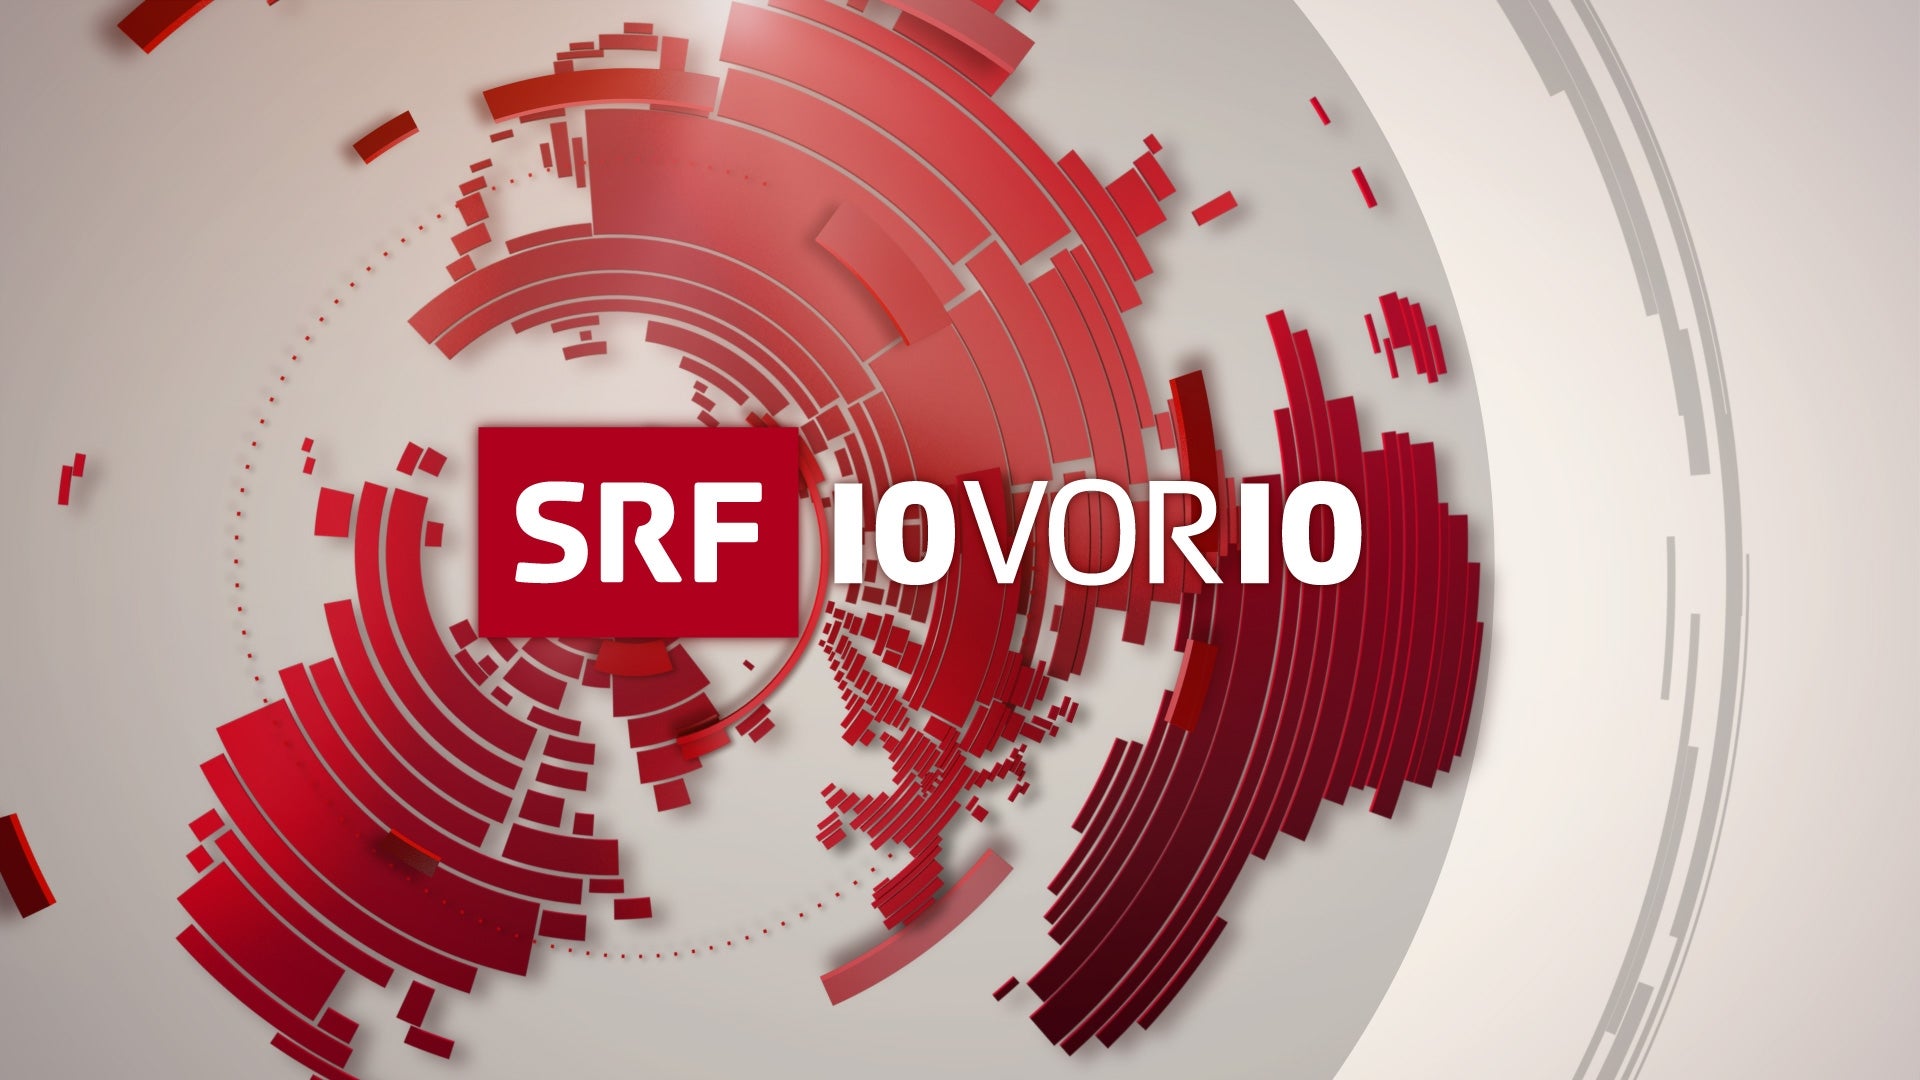 TV ratings for 10vor10 in Canada. SRF 1 TV series